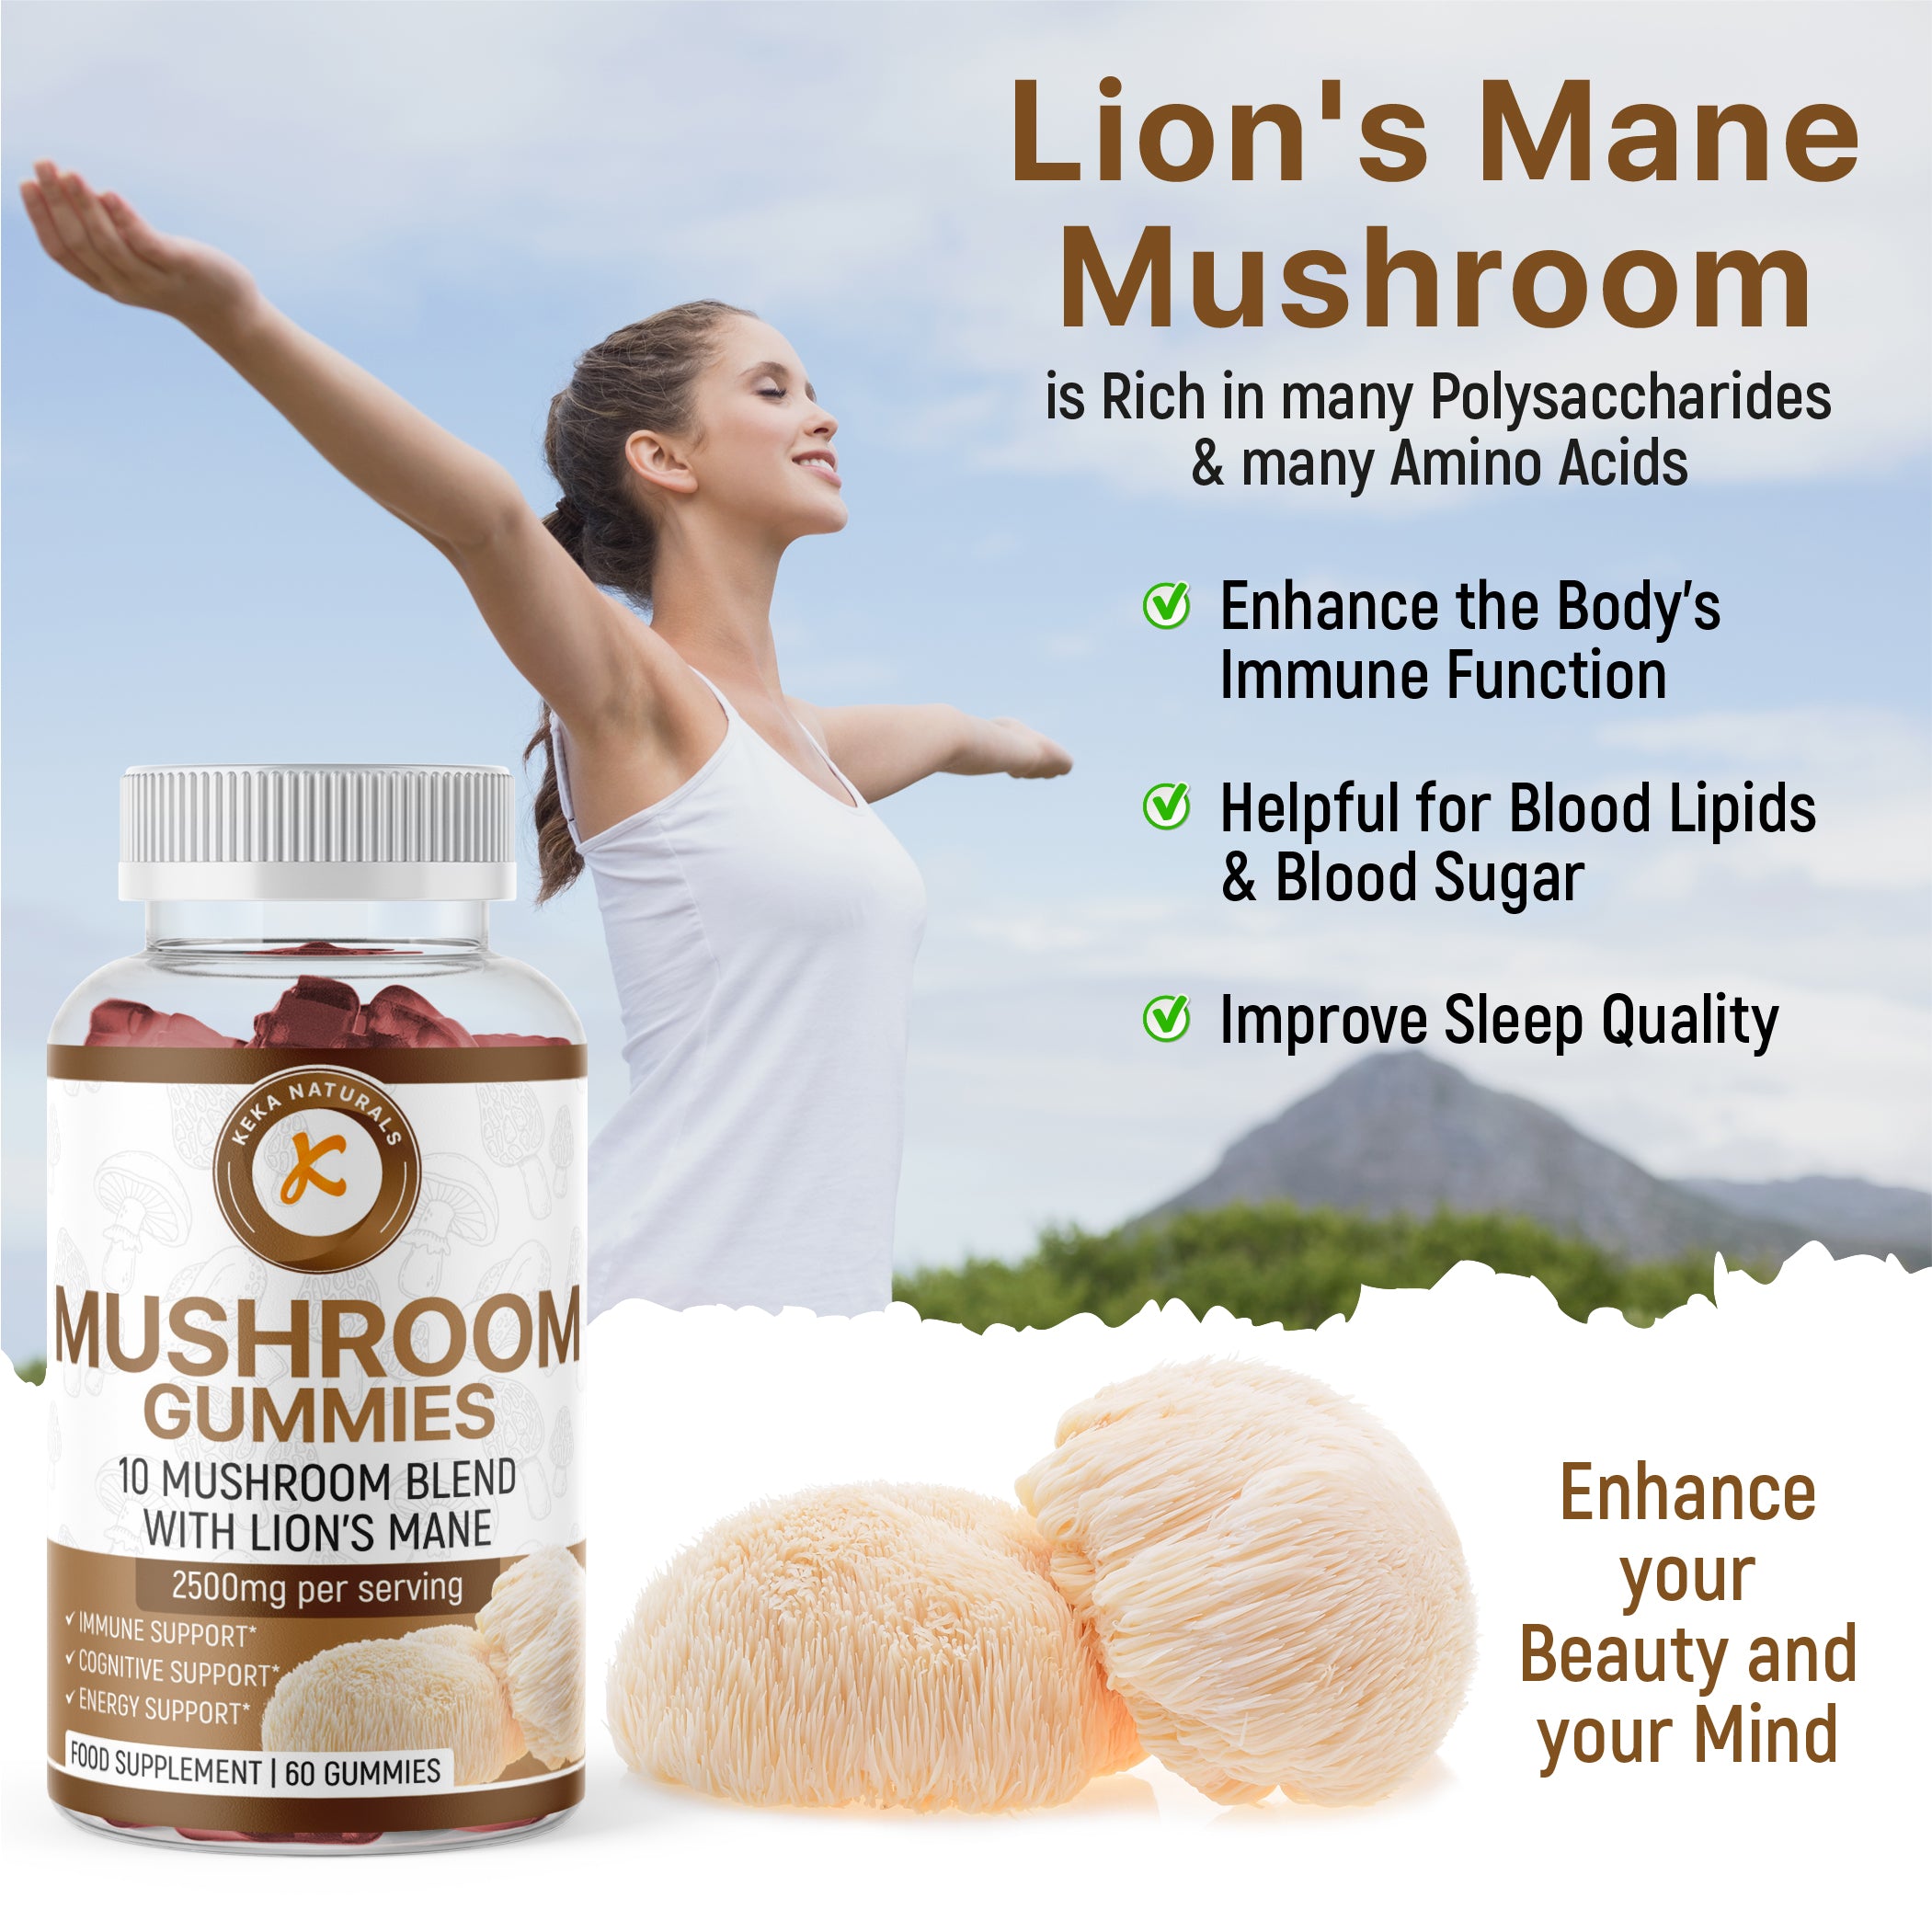 Mushroom Gummies 2500mg 10 mushroom blend with lions mane benefits to enhance your beauty and mind